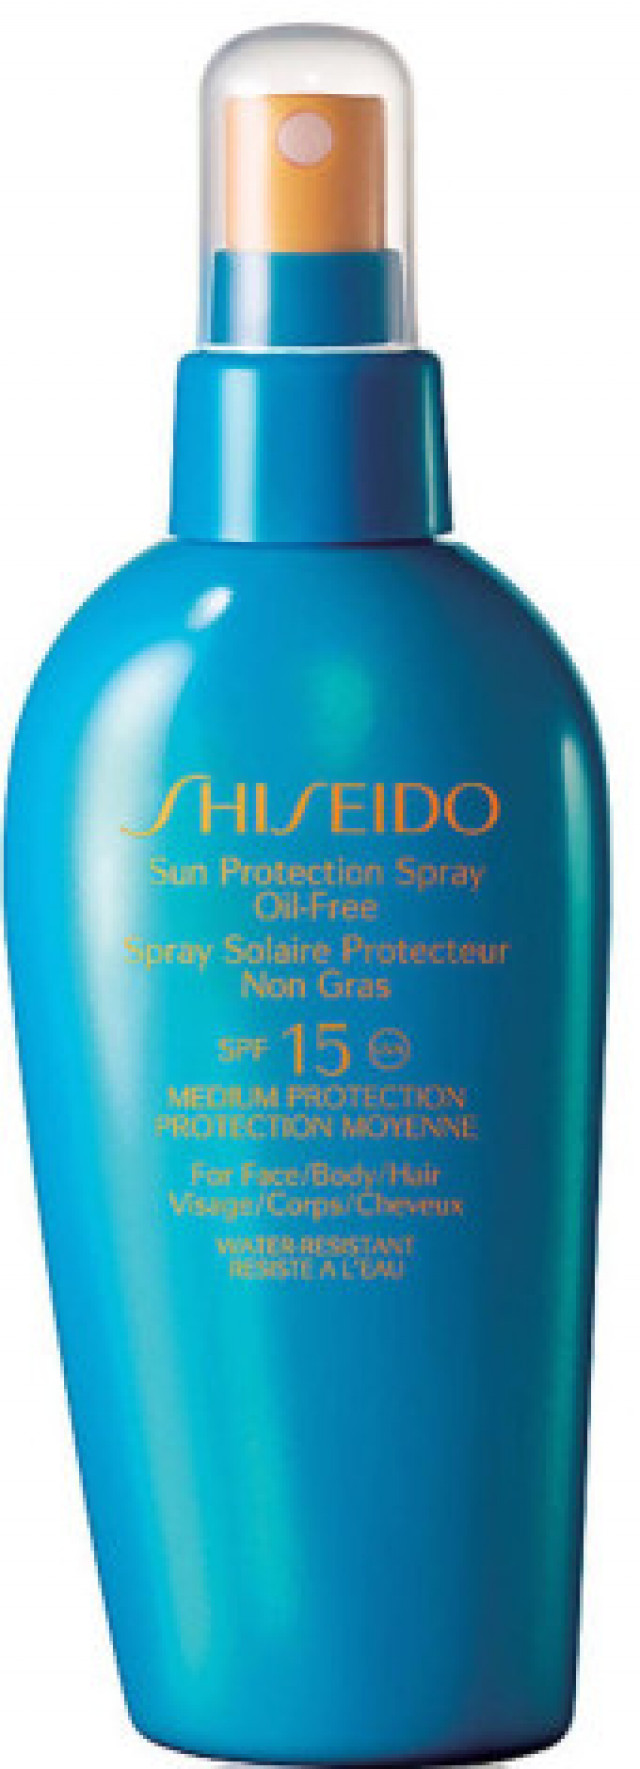 Sun protection spray lotion spf 15